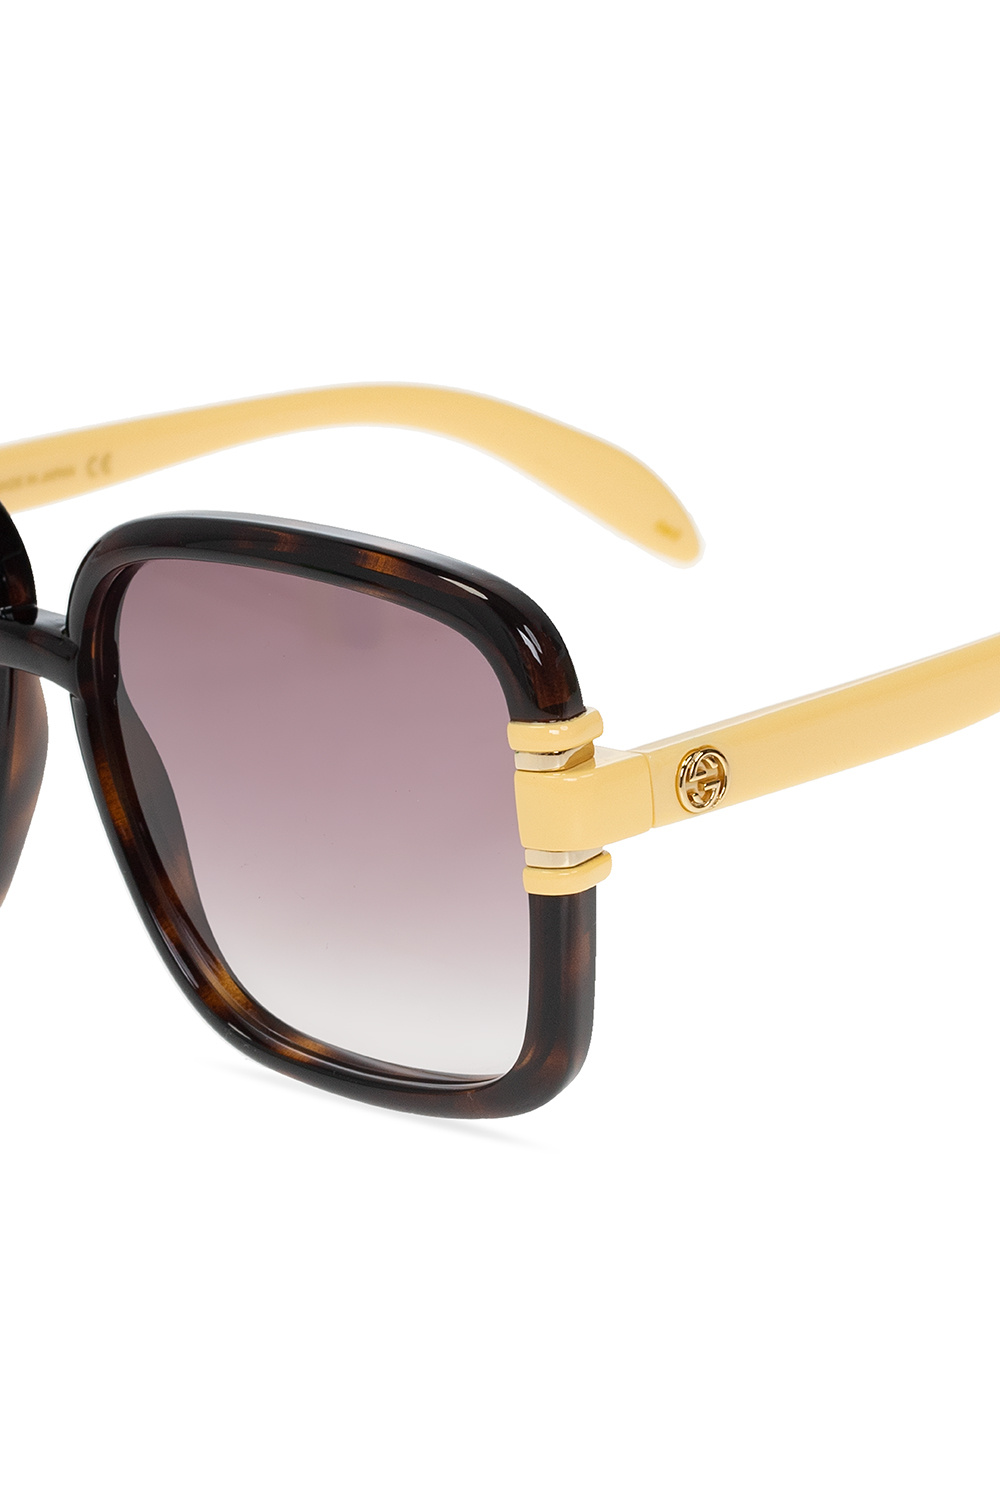 Gucci Linda Farrow Olivia round-frame sunglasses